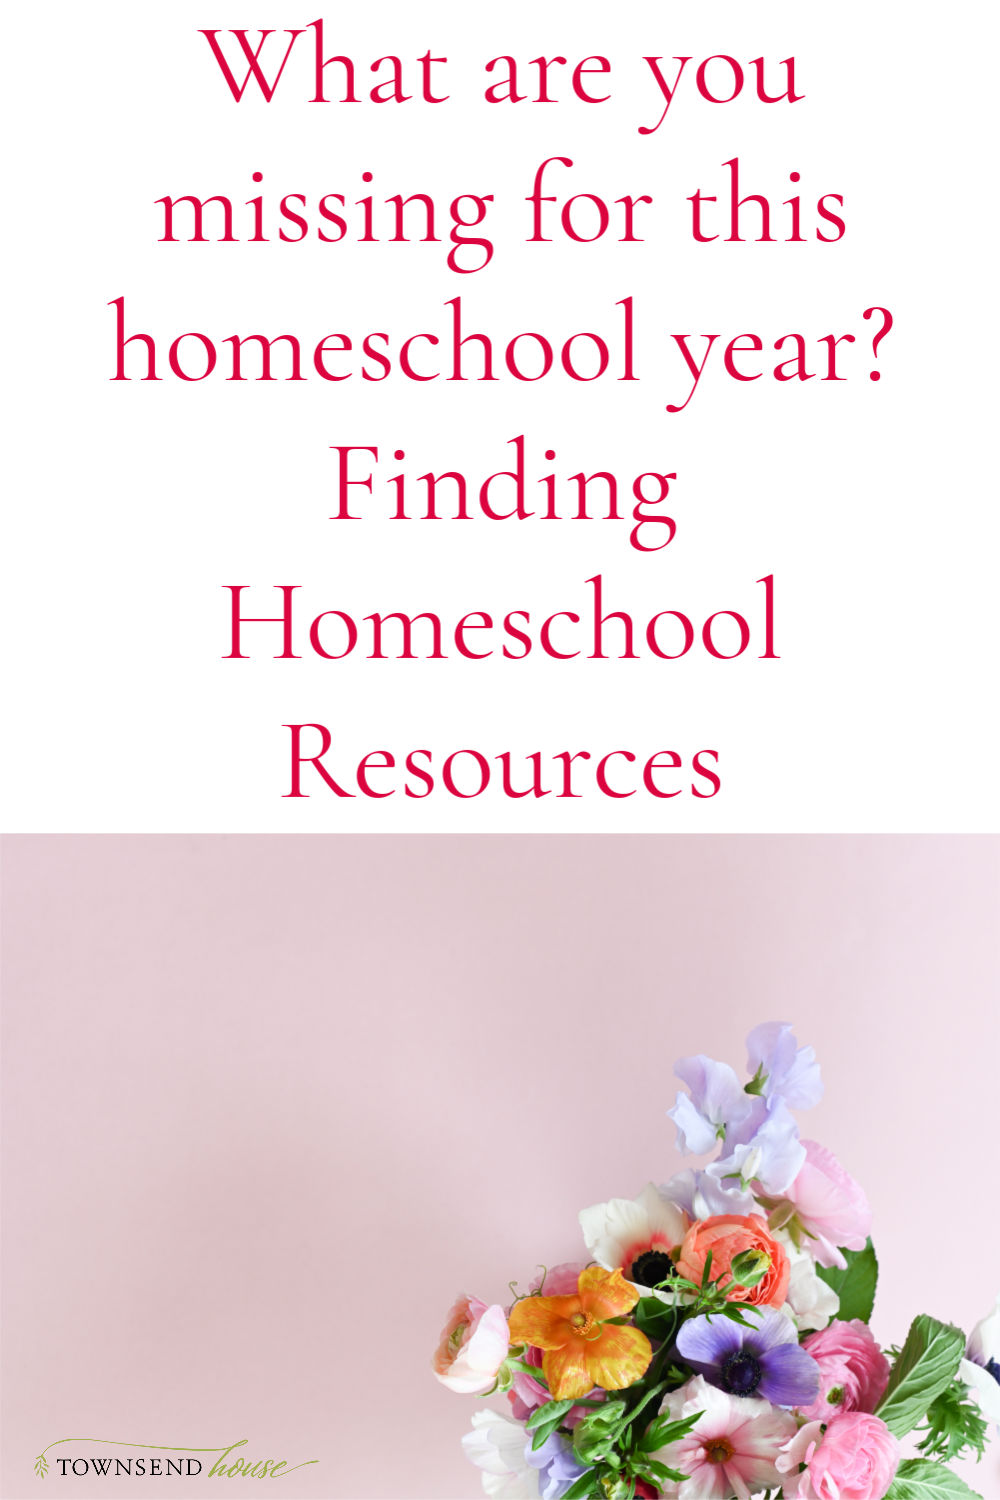 Missing Homeschool Resources